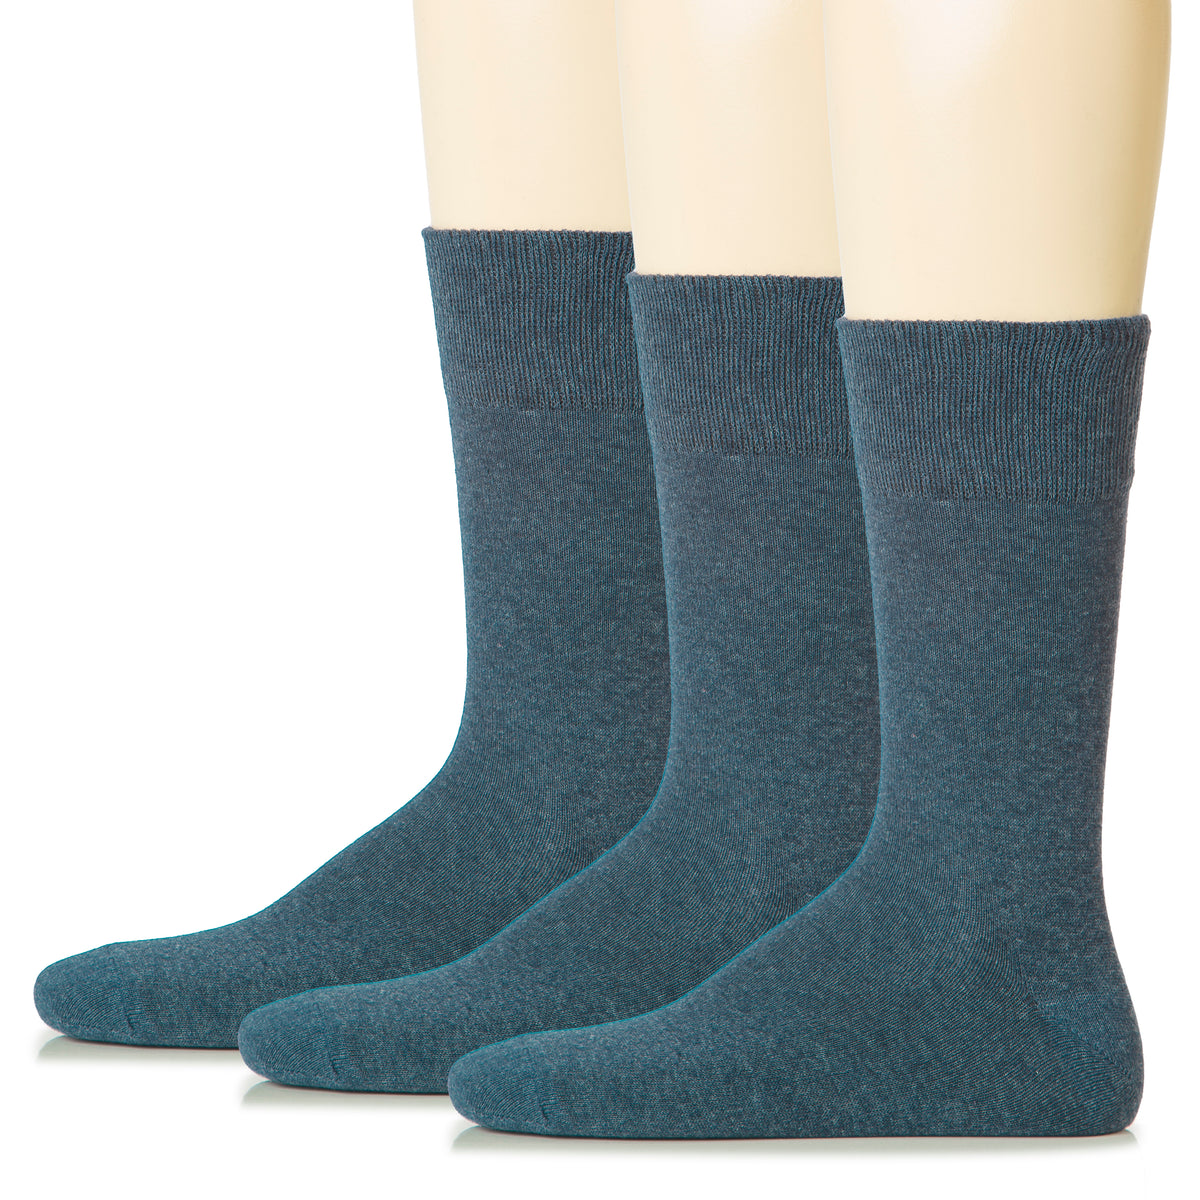 Hugh Ugoli Men Cotton Dress Socks XL / L / M / S Sizes, 3 Pairs | Shoe Size: 13-15 | Indigo